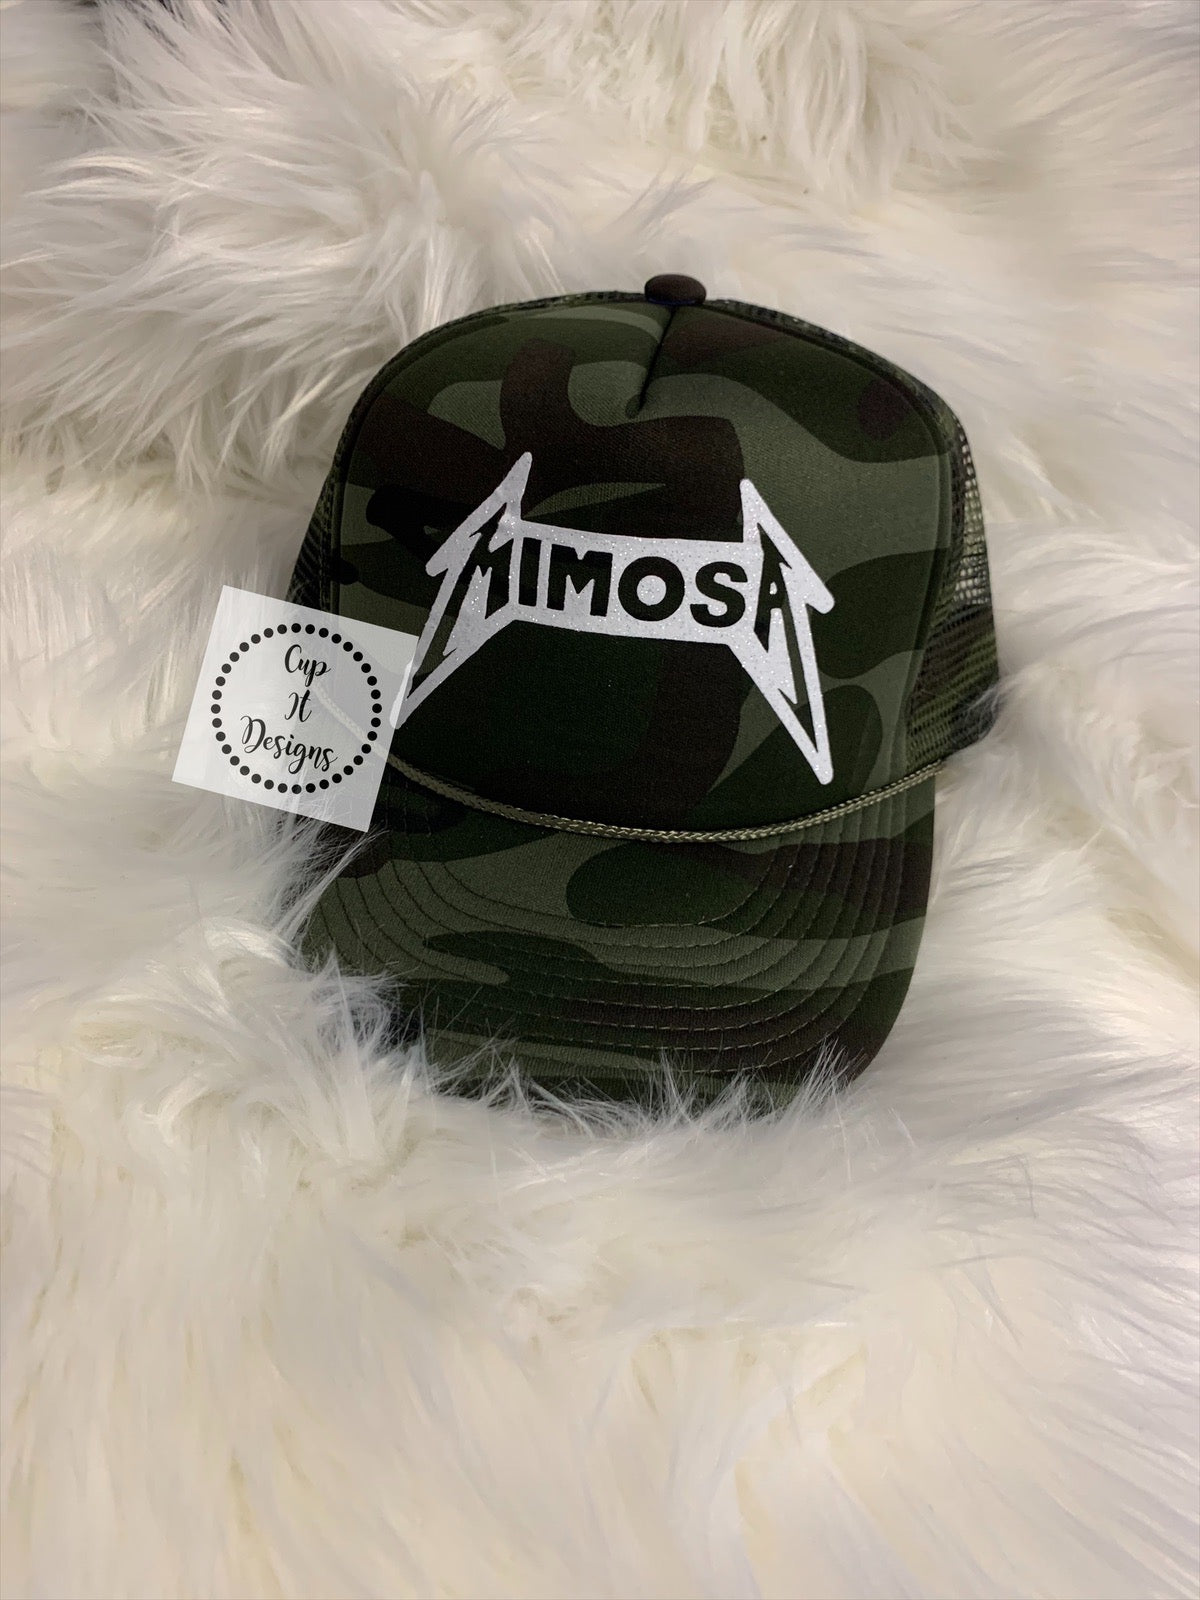 Camo MIMOSA/MOMOSA Trucker Hat